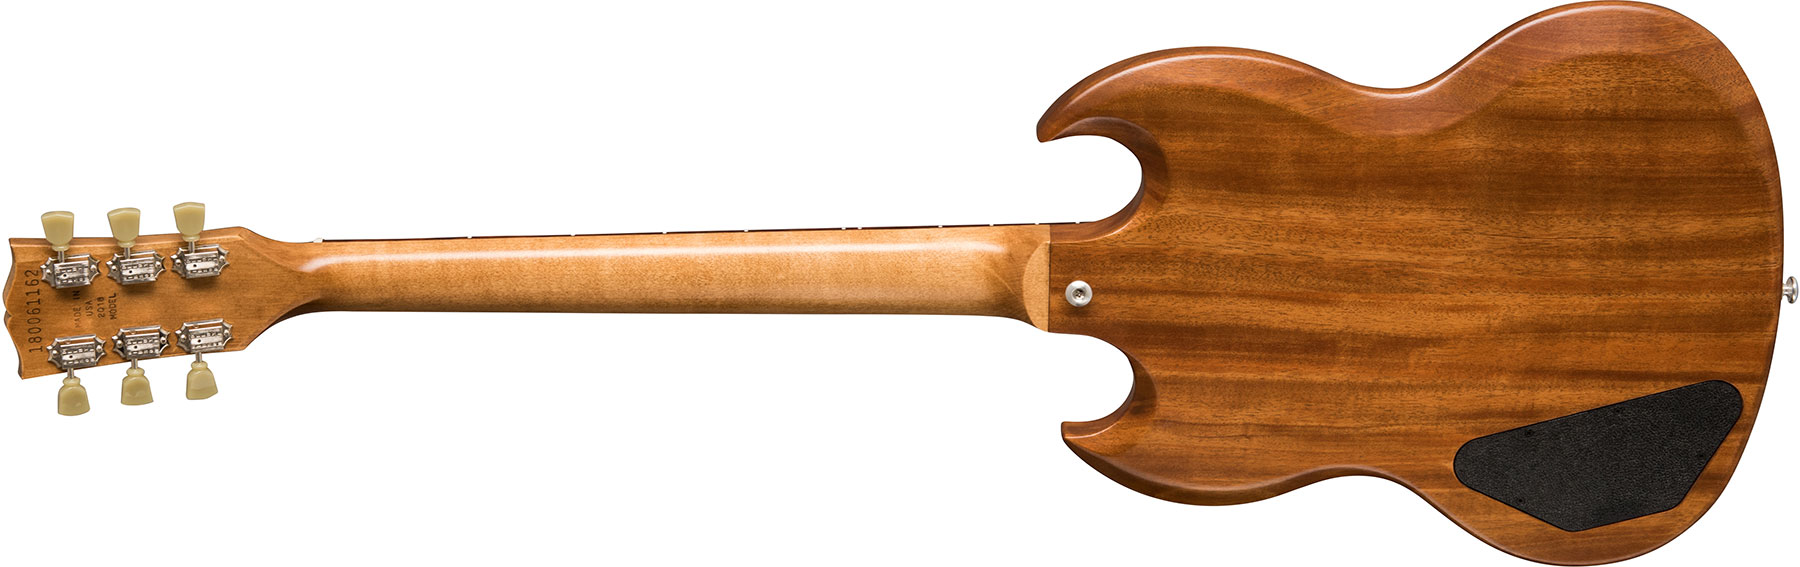 Gibson Sg Standard Tribute - Natural Walnut - Guitarra eléctrica de doble corte. - Variation 1